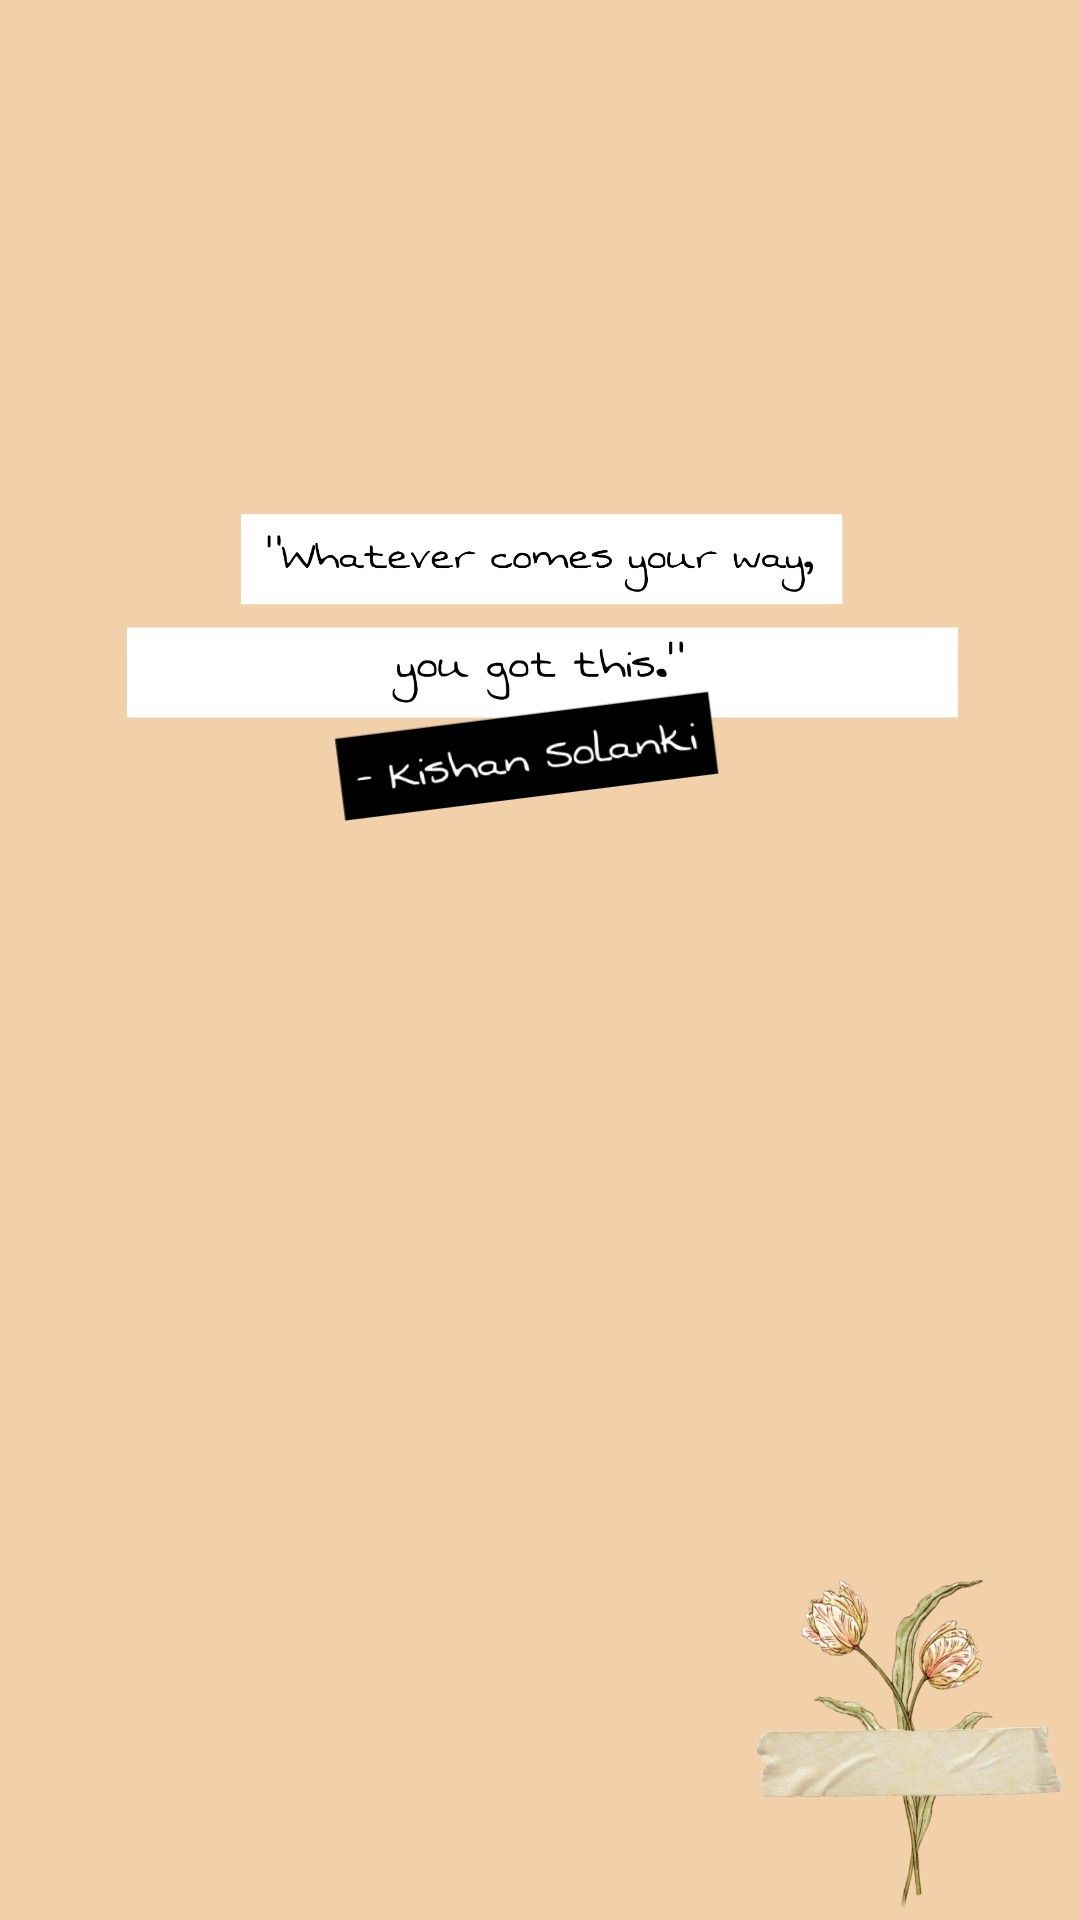 Motivational Quotes Wallpaper. Motivational quotes wallpaper, Inspirational quotes motivation, Wallpaper quotes